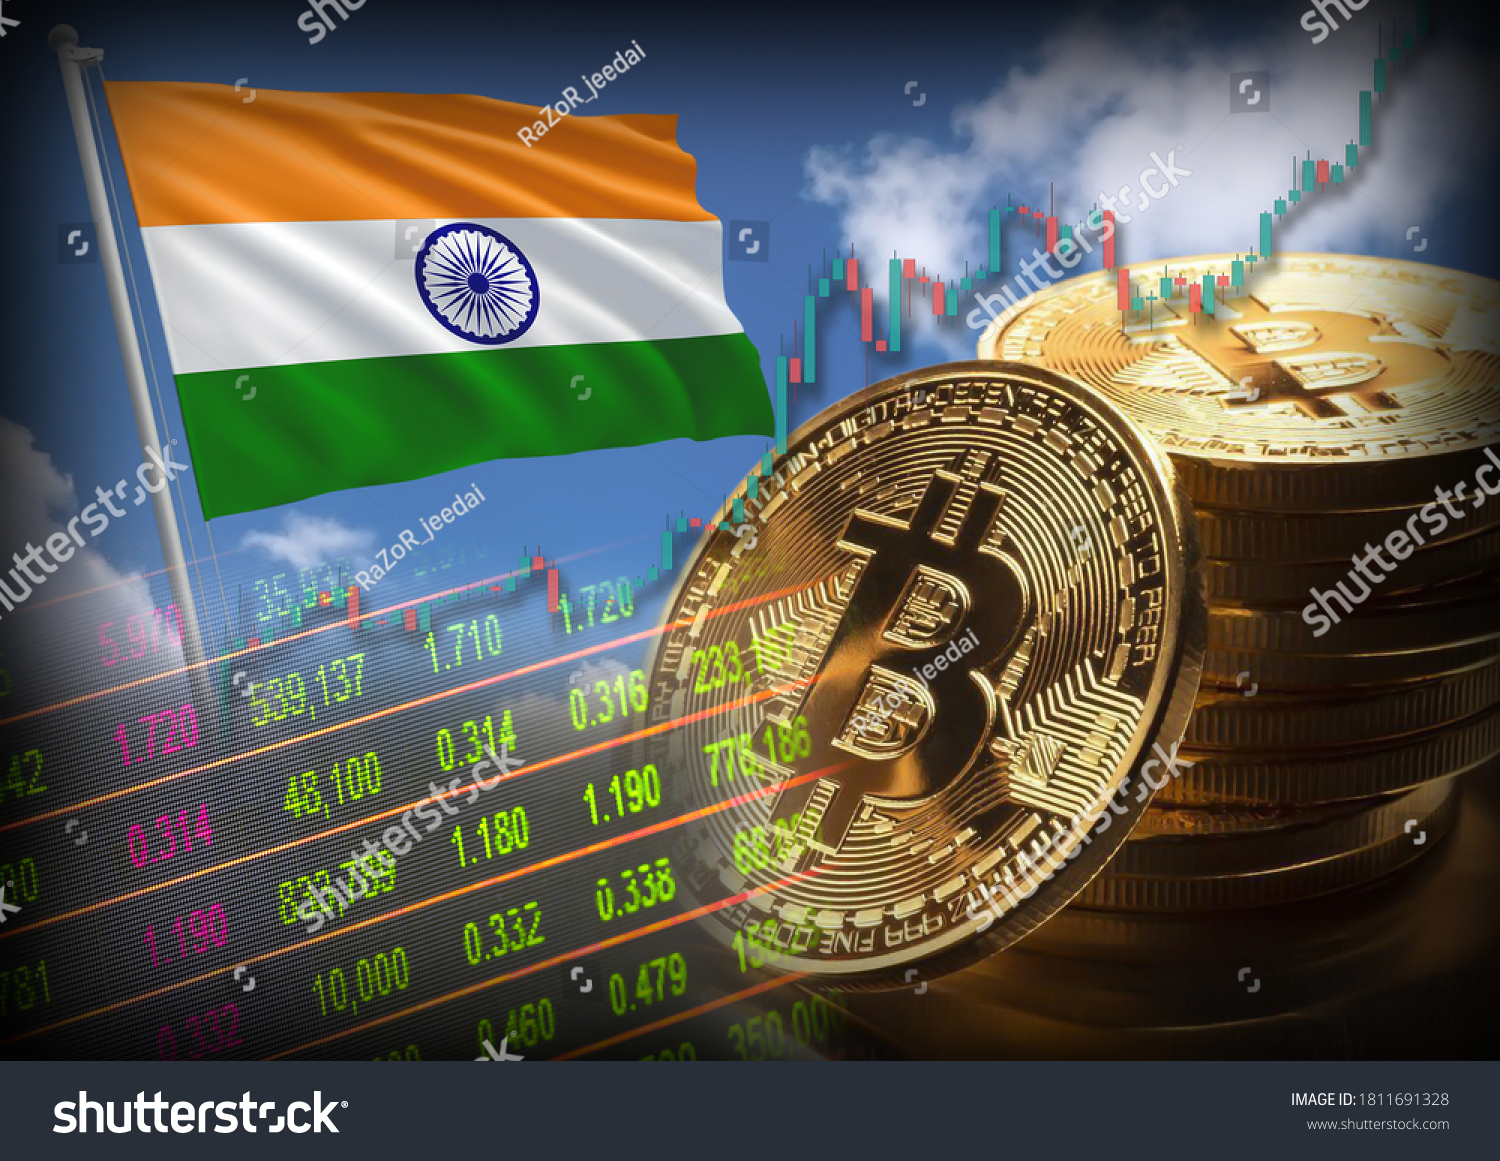 bitcoin stock india